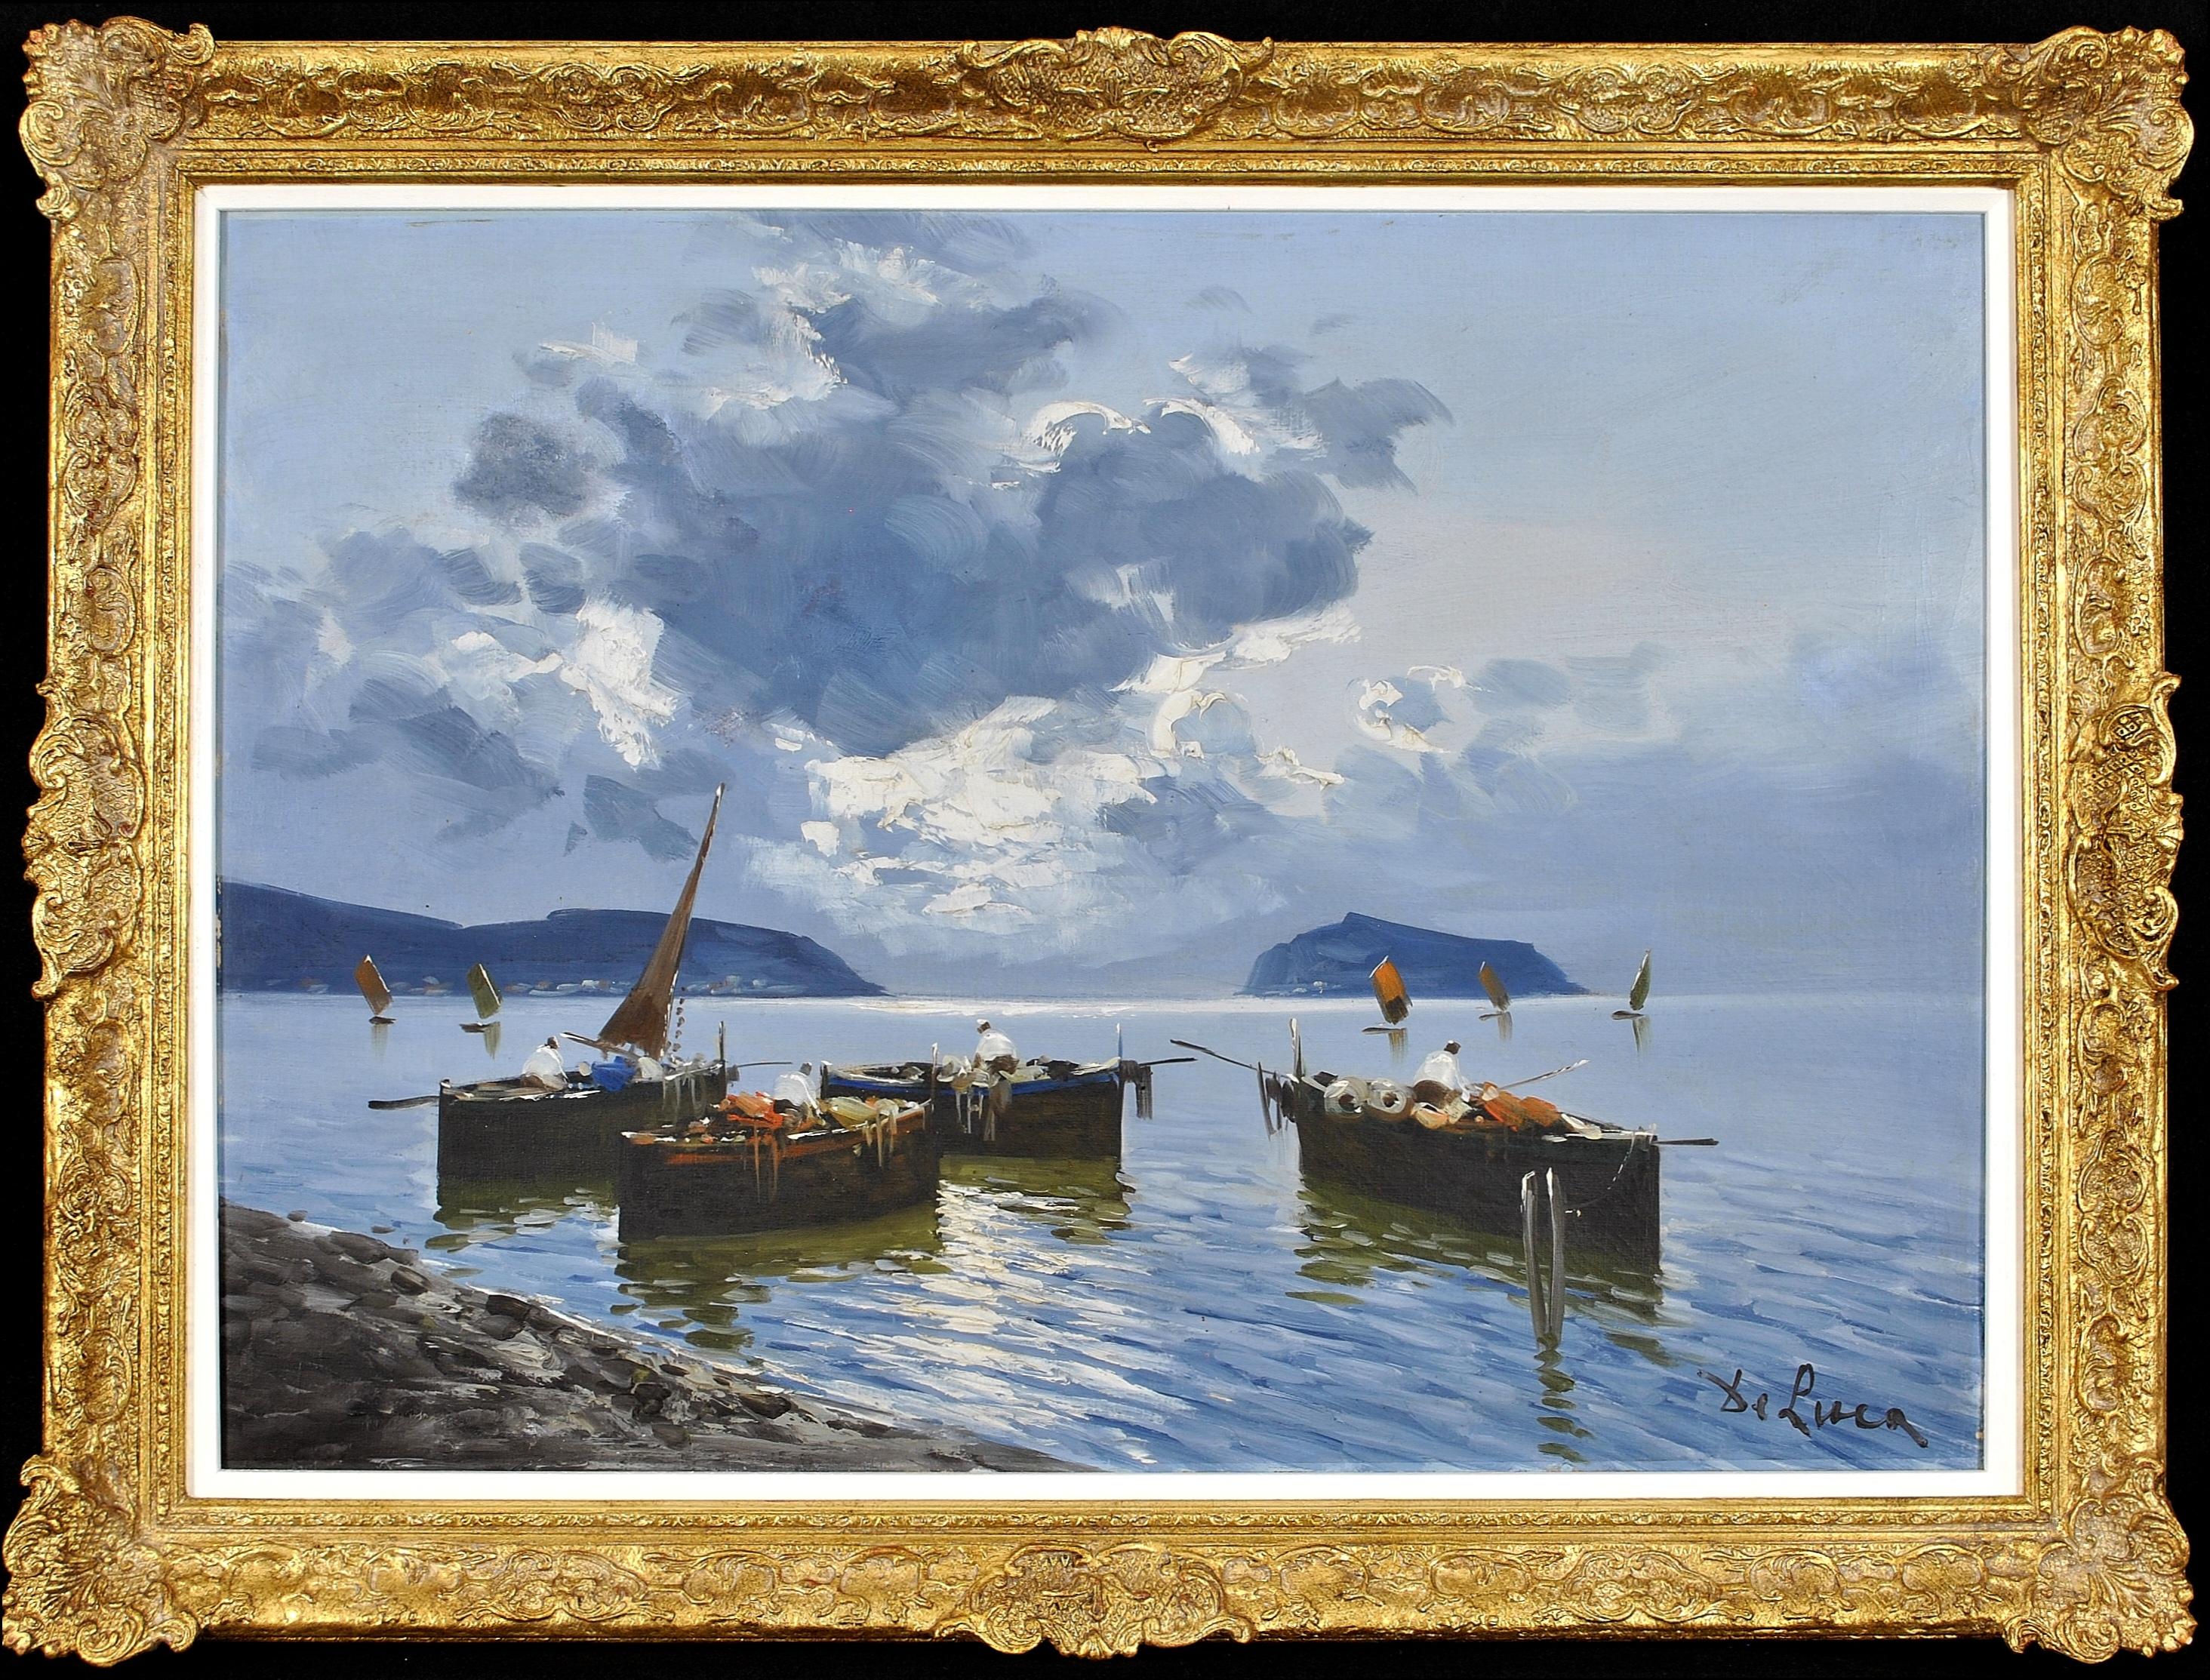 Luigi De Luca Landscape Painting - Fishermen on Bay of Naples - Large Italian Impressionist Seascape Oil Painting